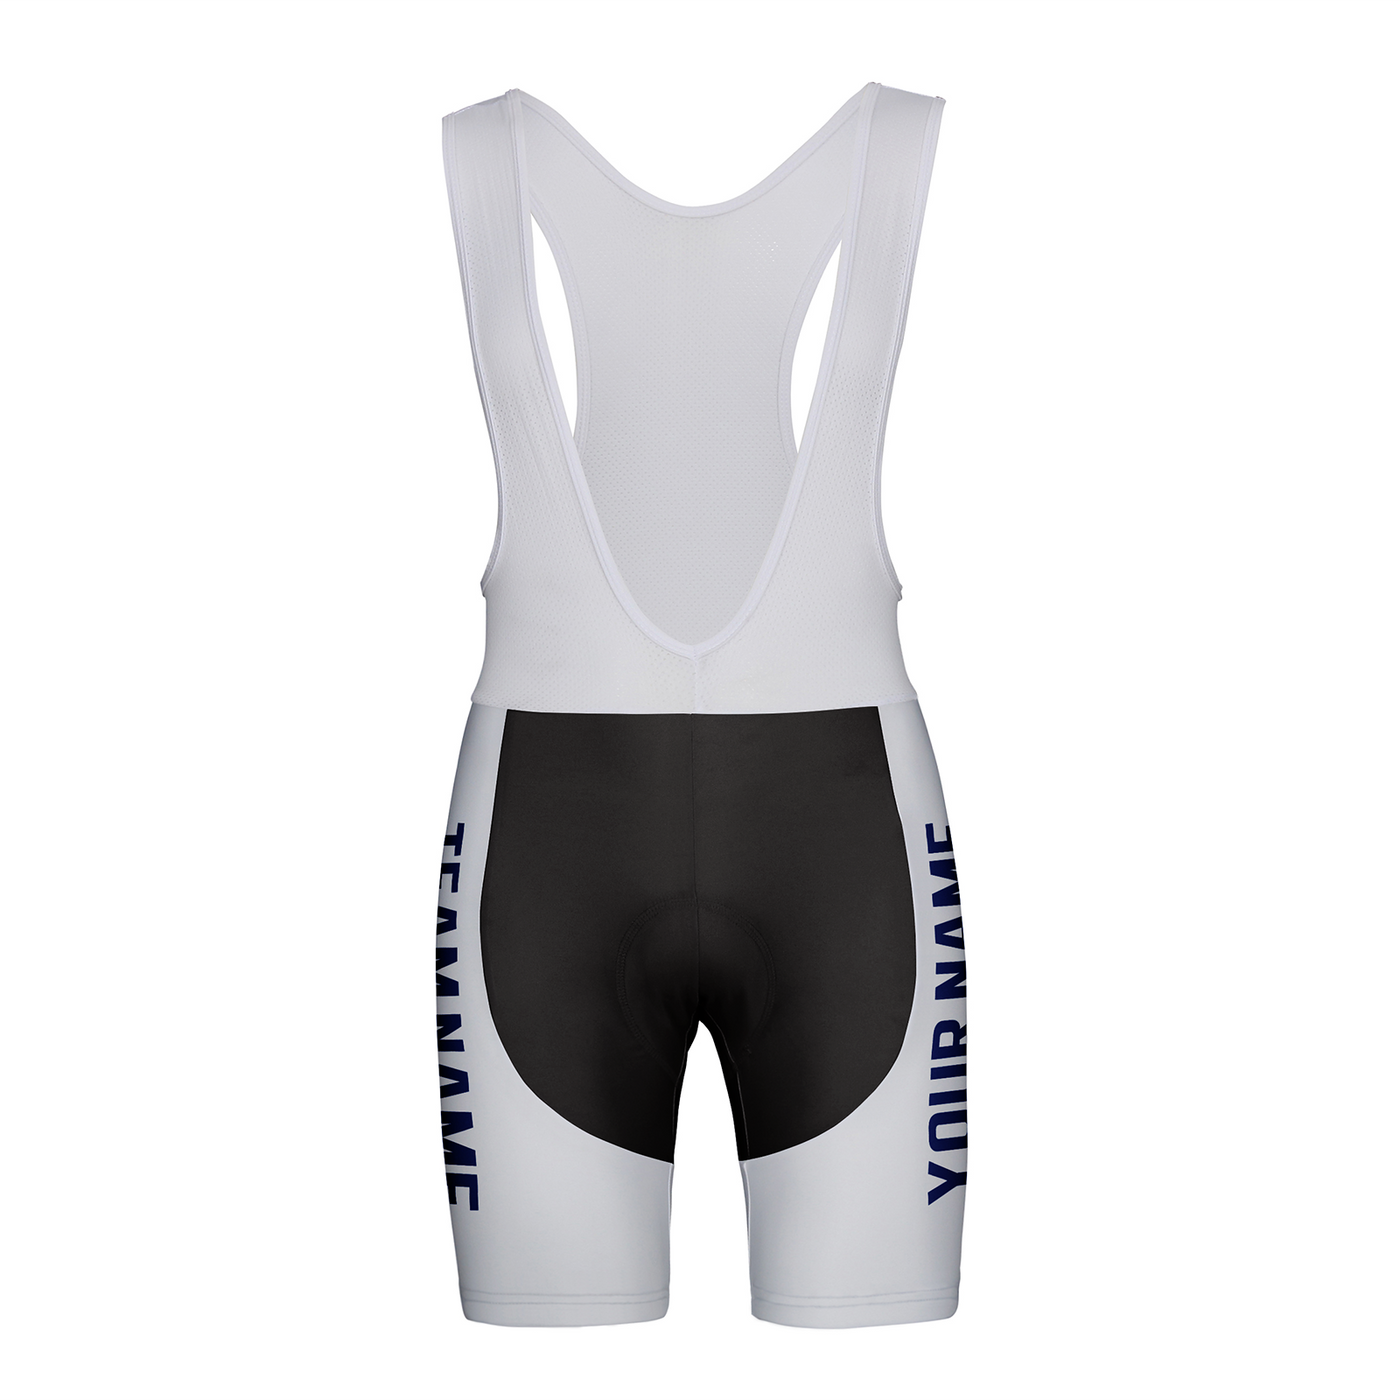 Customized Los Angeles Team Unisex Cycling Bib Shorts